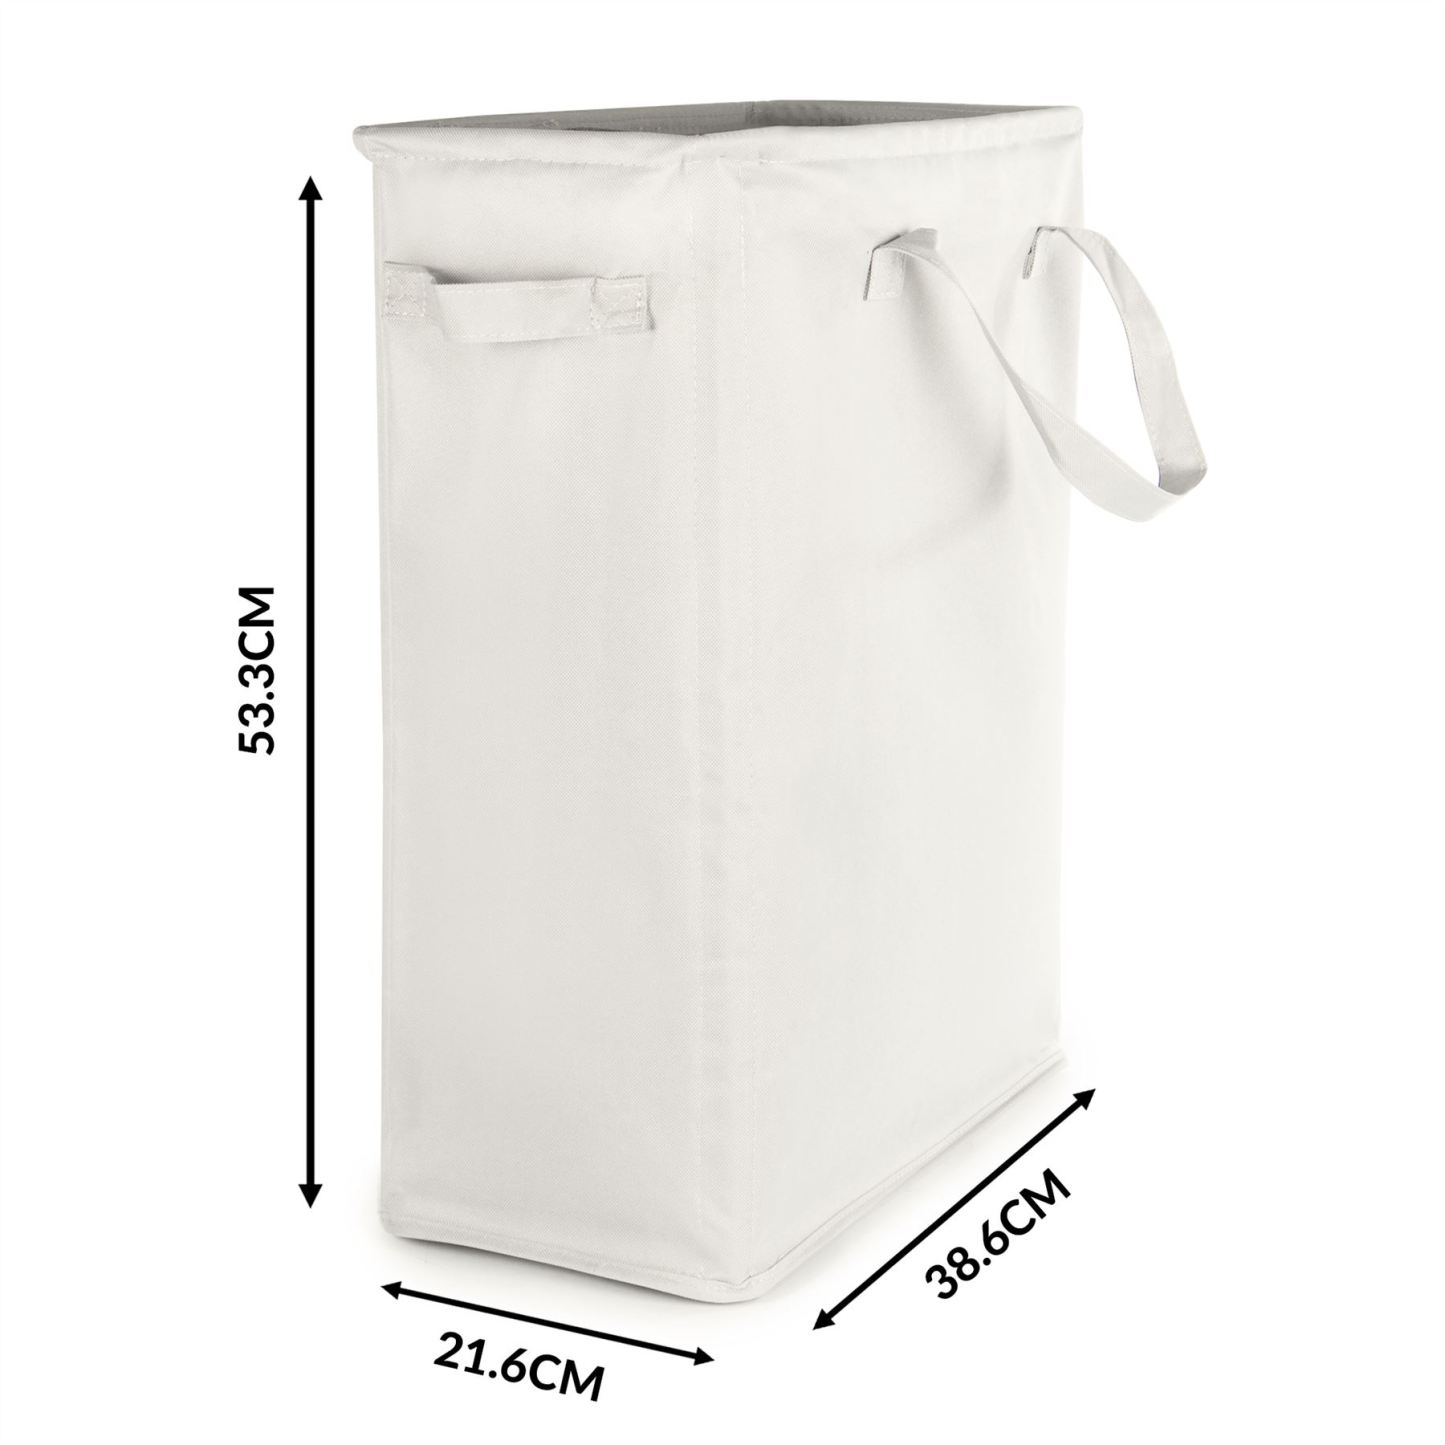 45L Slim Laundry Basket with Handles White | M&W